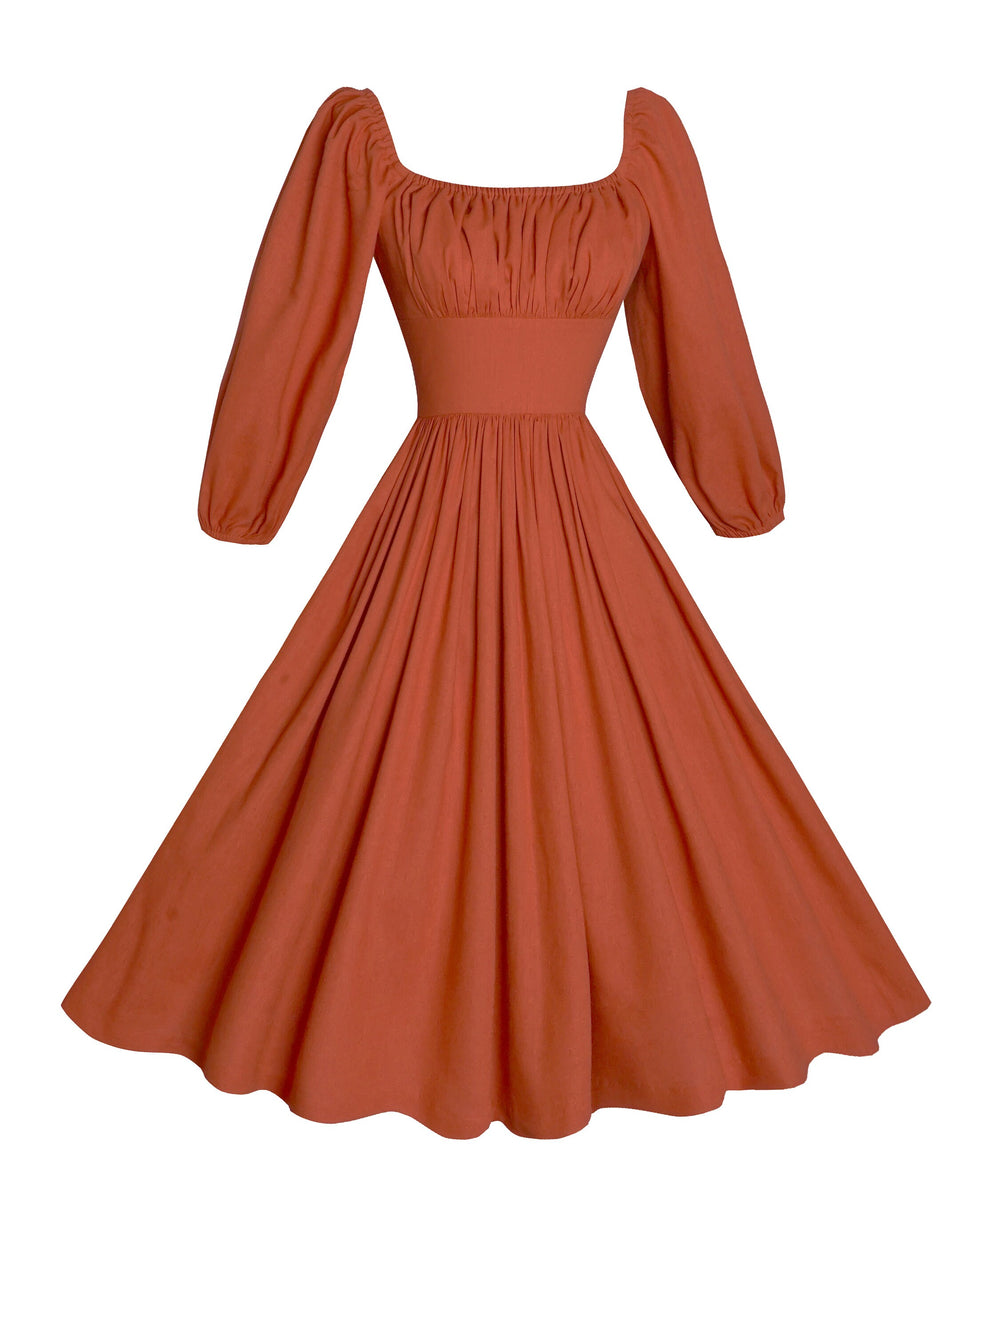 MTO - Sydney Dress in Redwood Linen